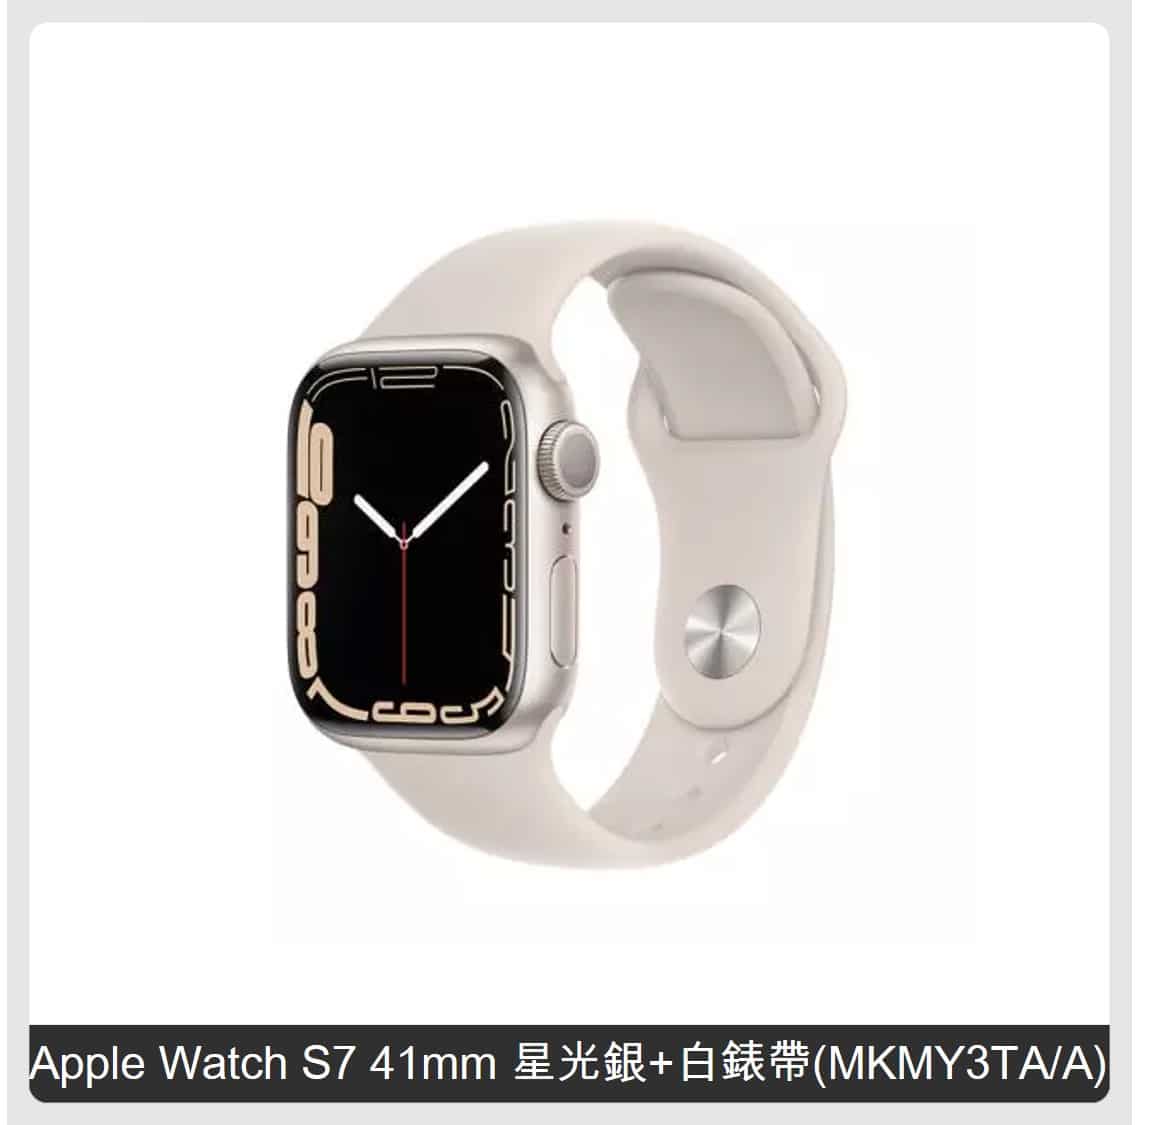 Apple Watch S7 41mm 星光銀+白色運動錶帶(MKMY3TA/A) | 法雅客網路商店